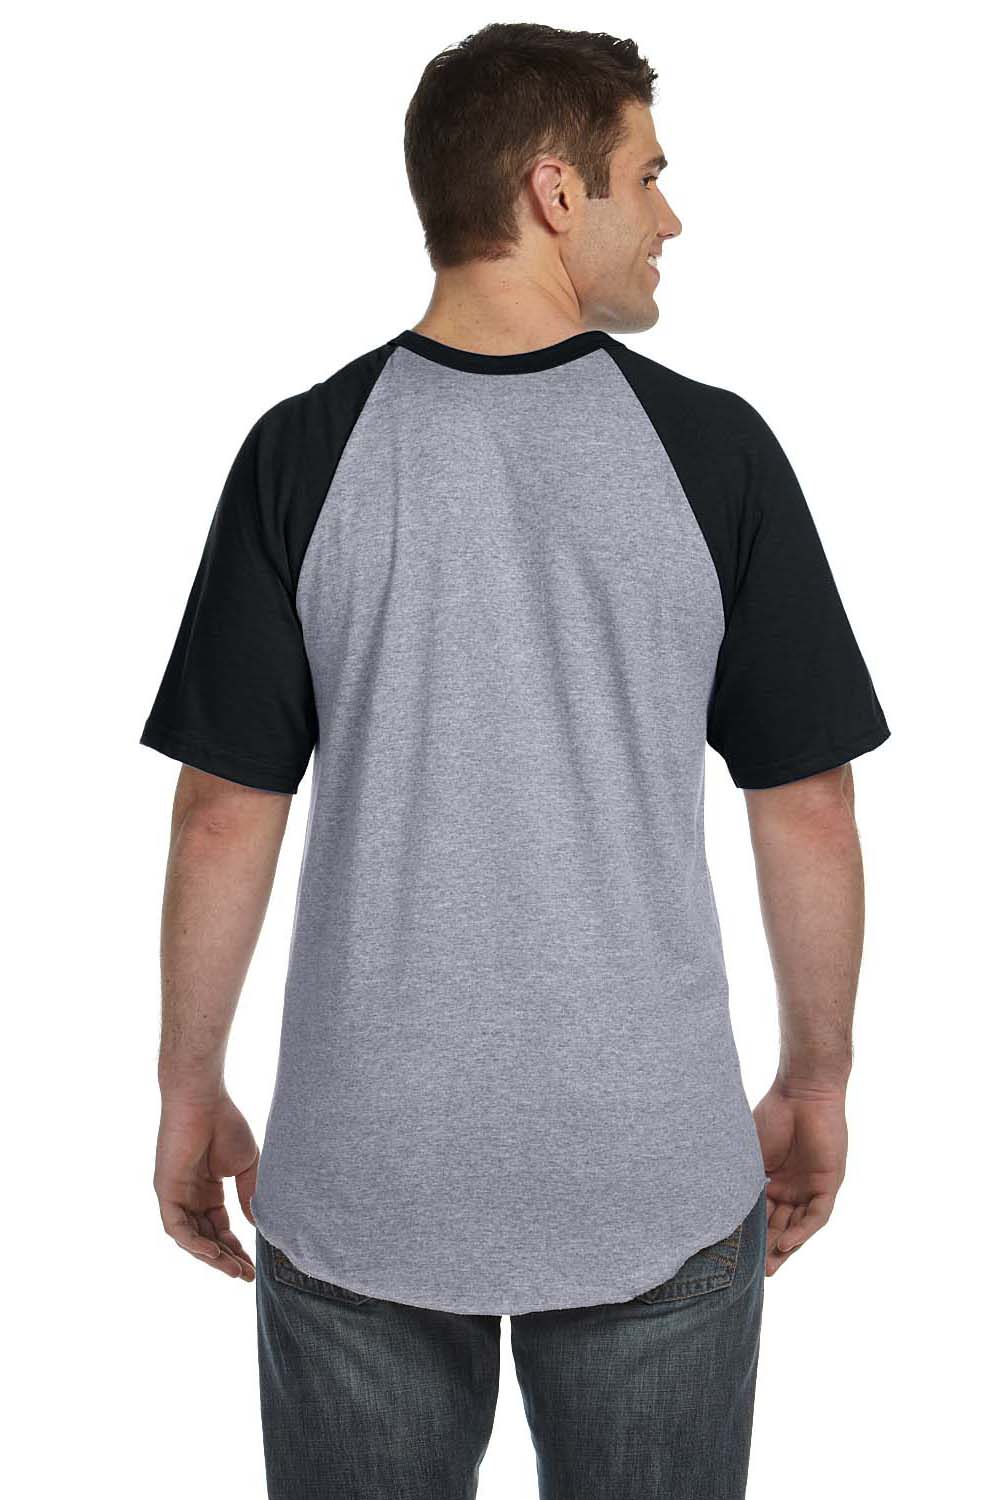 Augusta Sportswear 423 Mens Short Sleeve Crewneck T-Shirt Heather Grey/Black Model Back